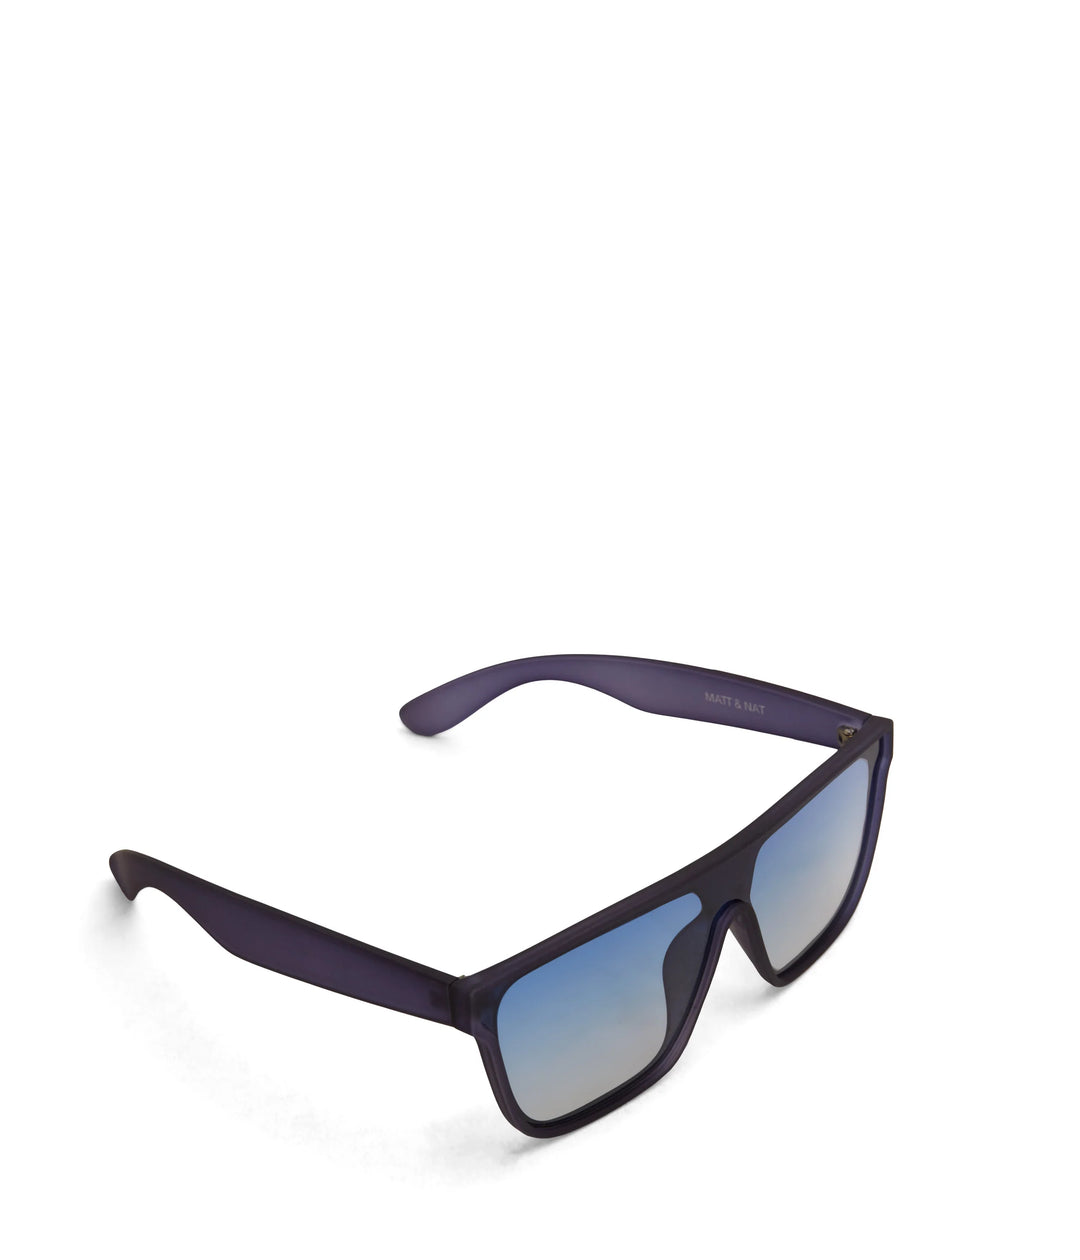 Feige Sunglasses - Blue